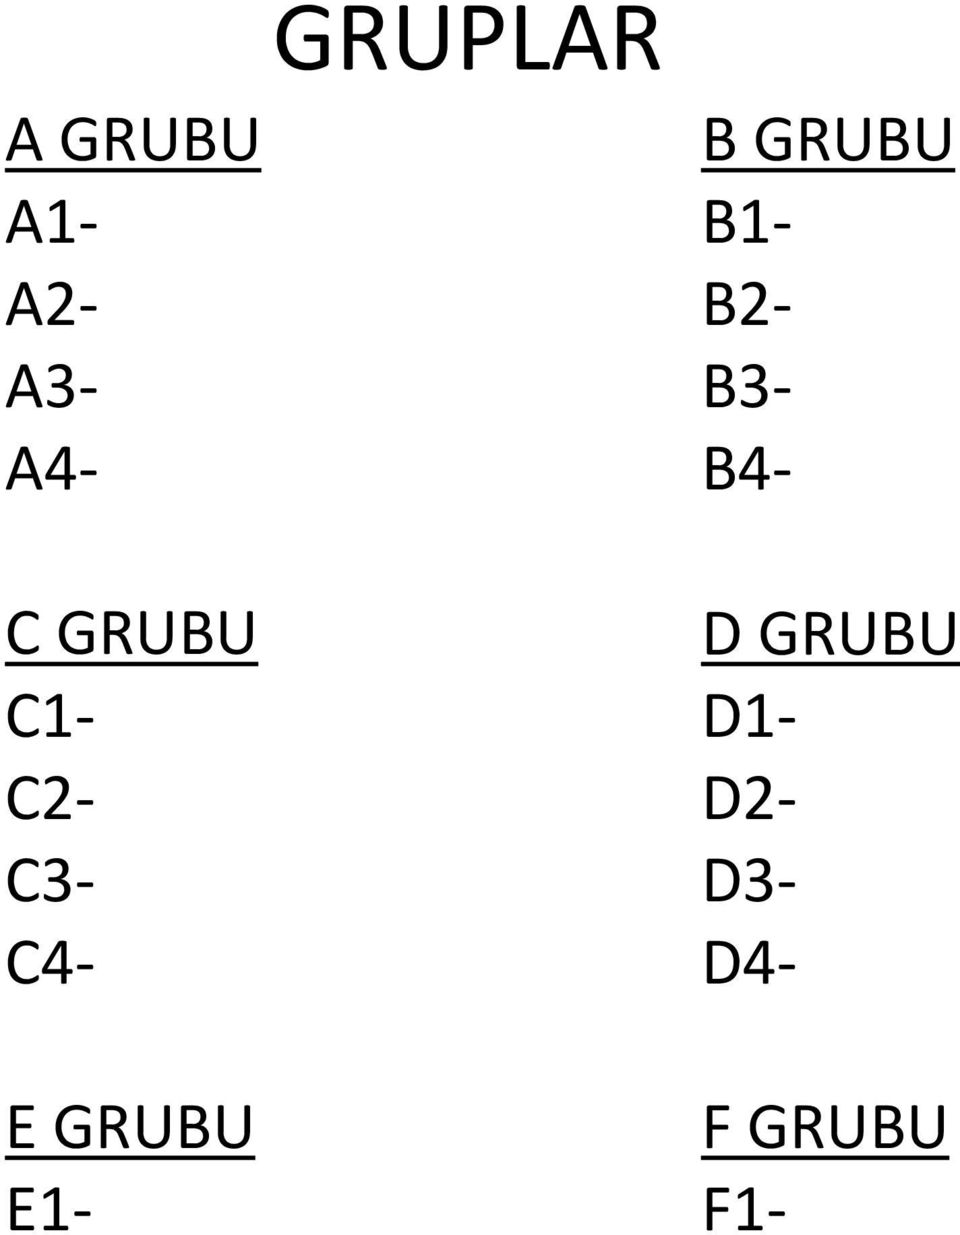 D GRUBU C1- D1- C2- D2- C3- D3-